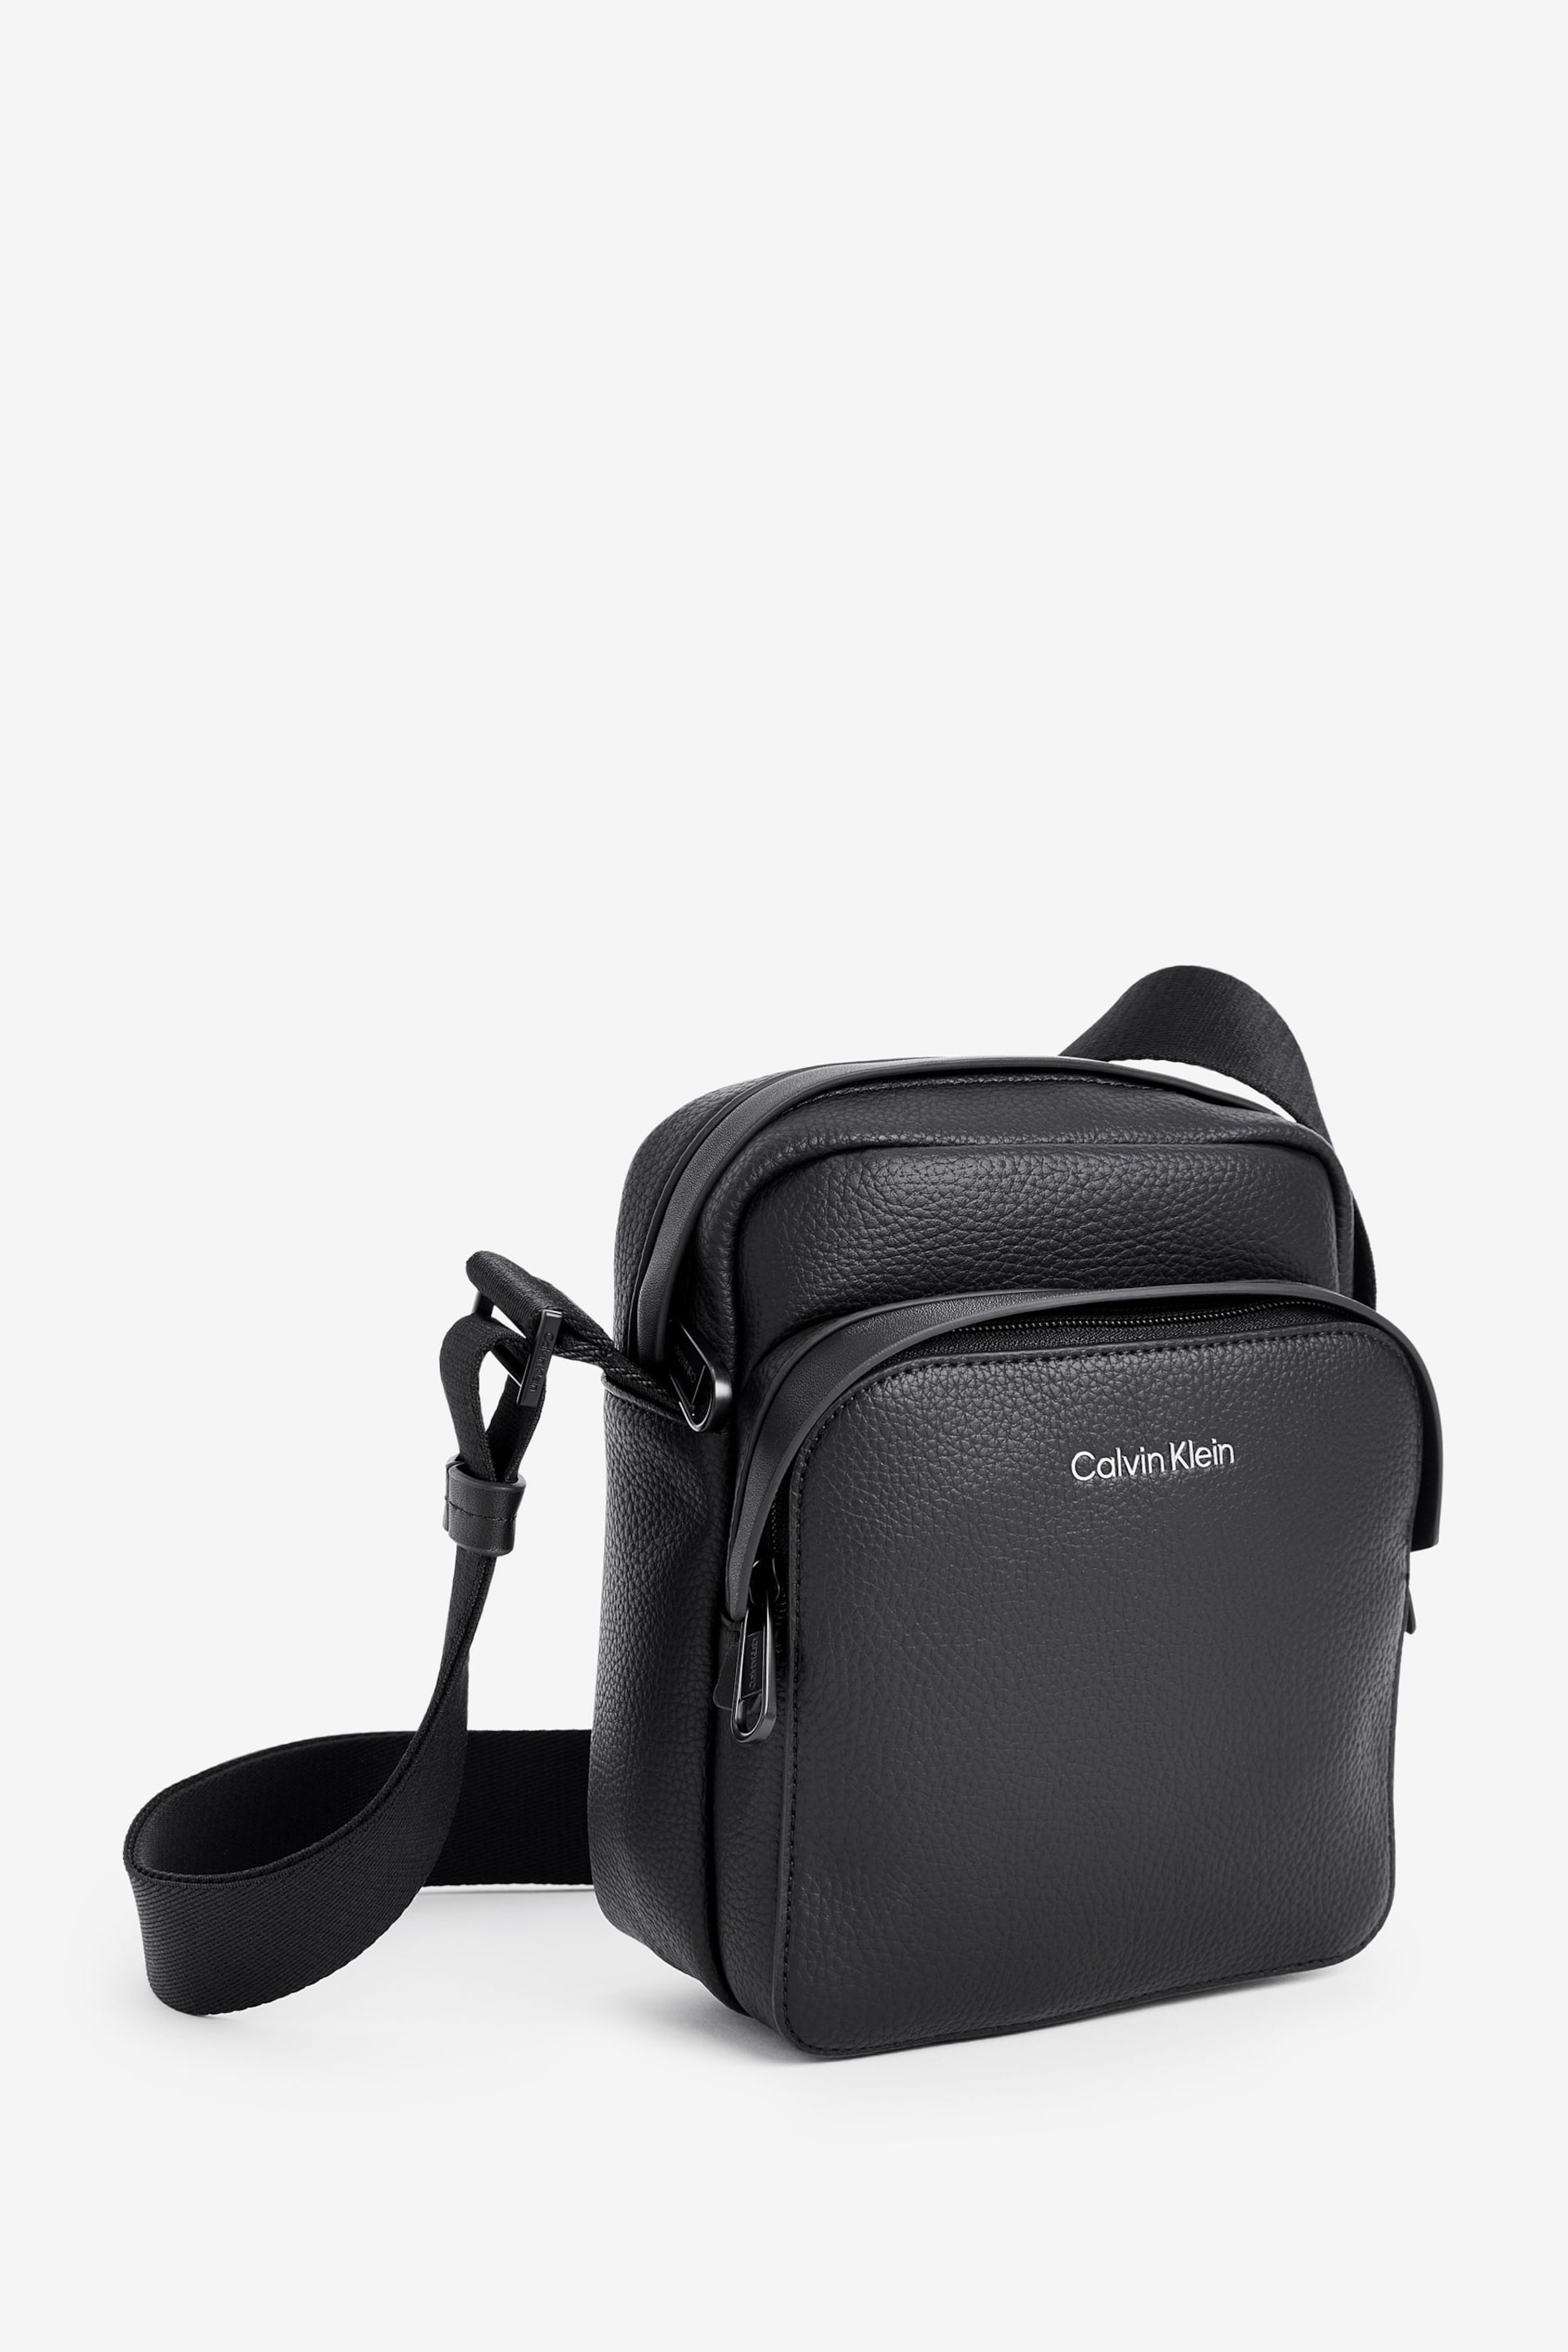 Calvin Klein Black Logo Messenger Bag - Image 5 of 7